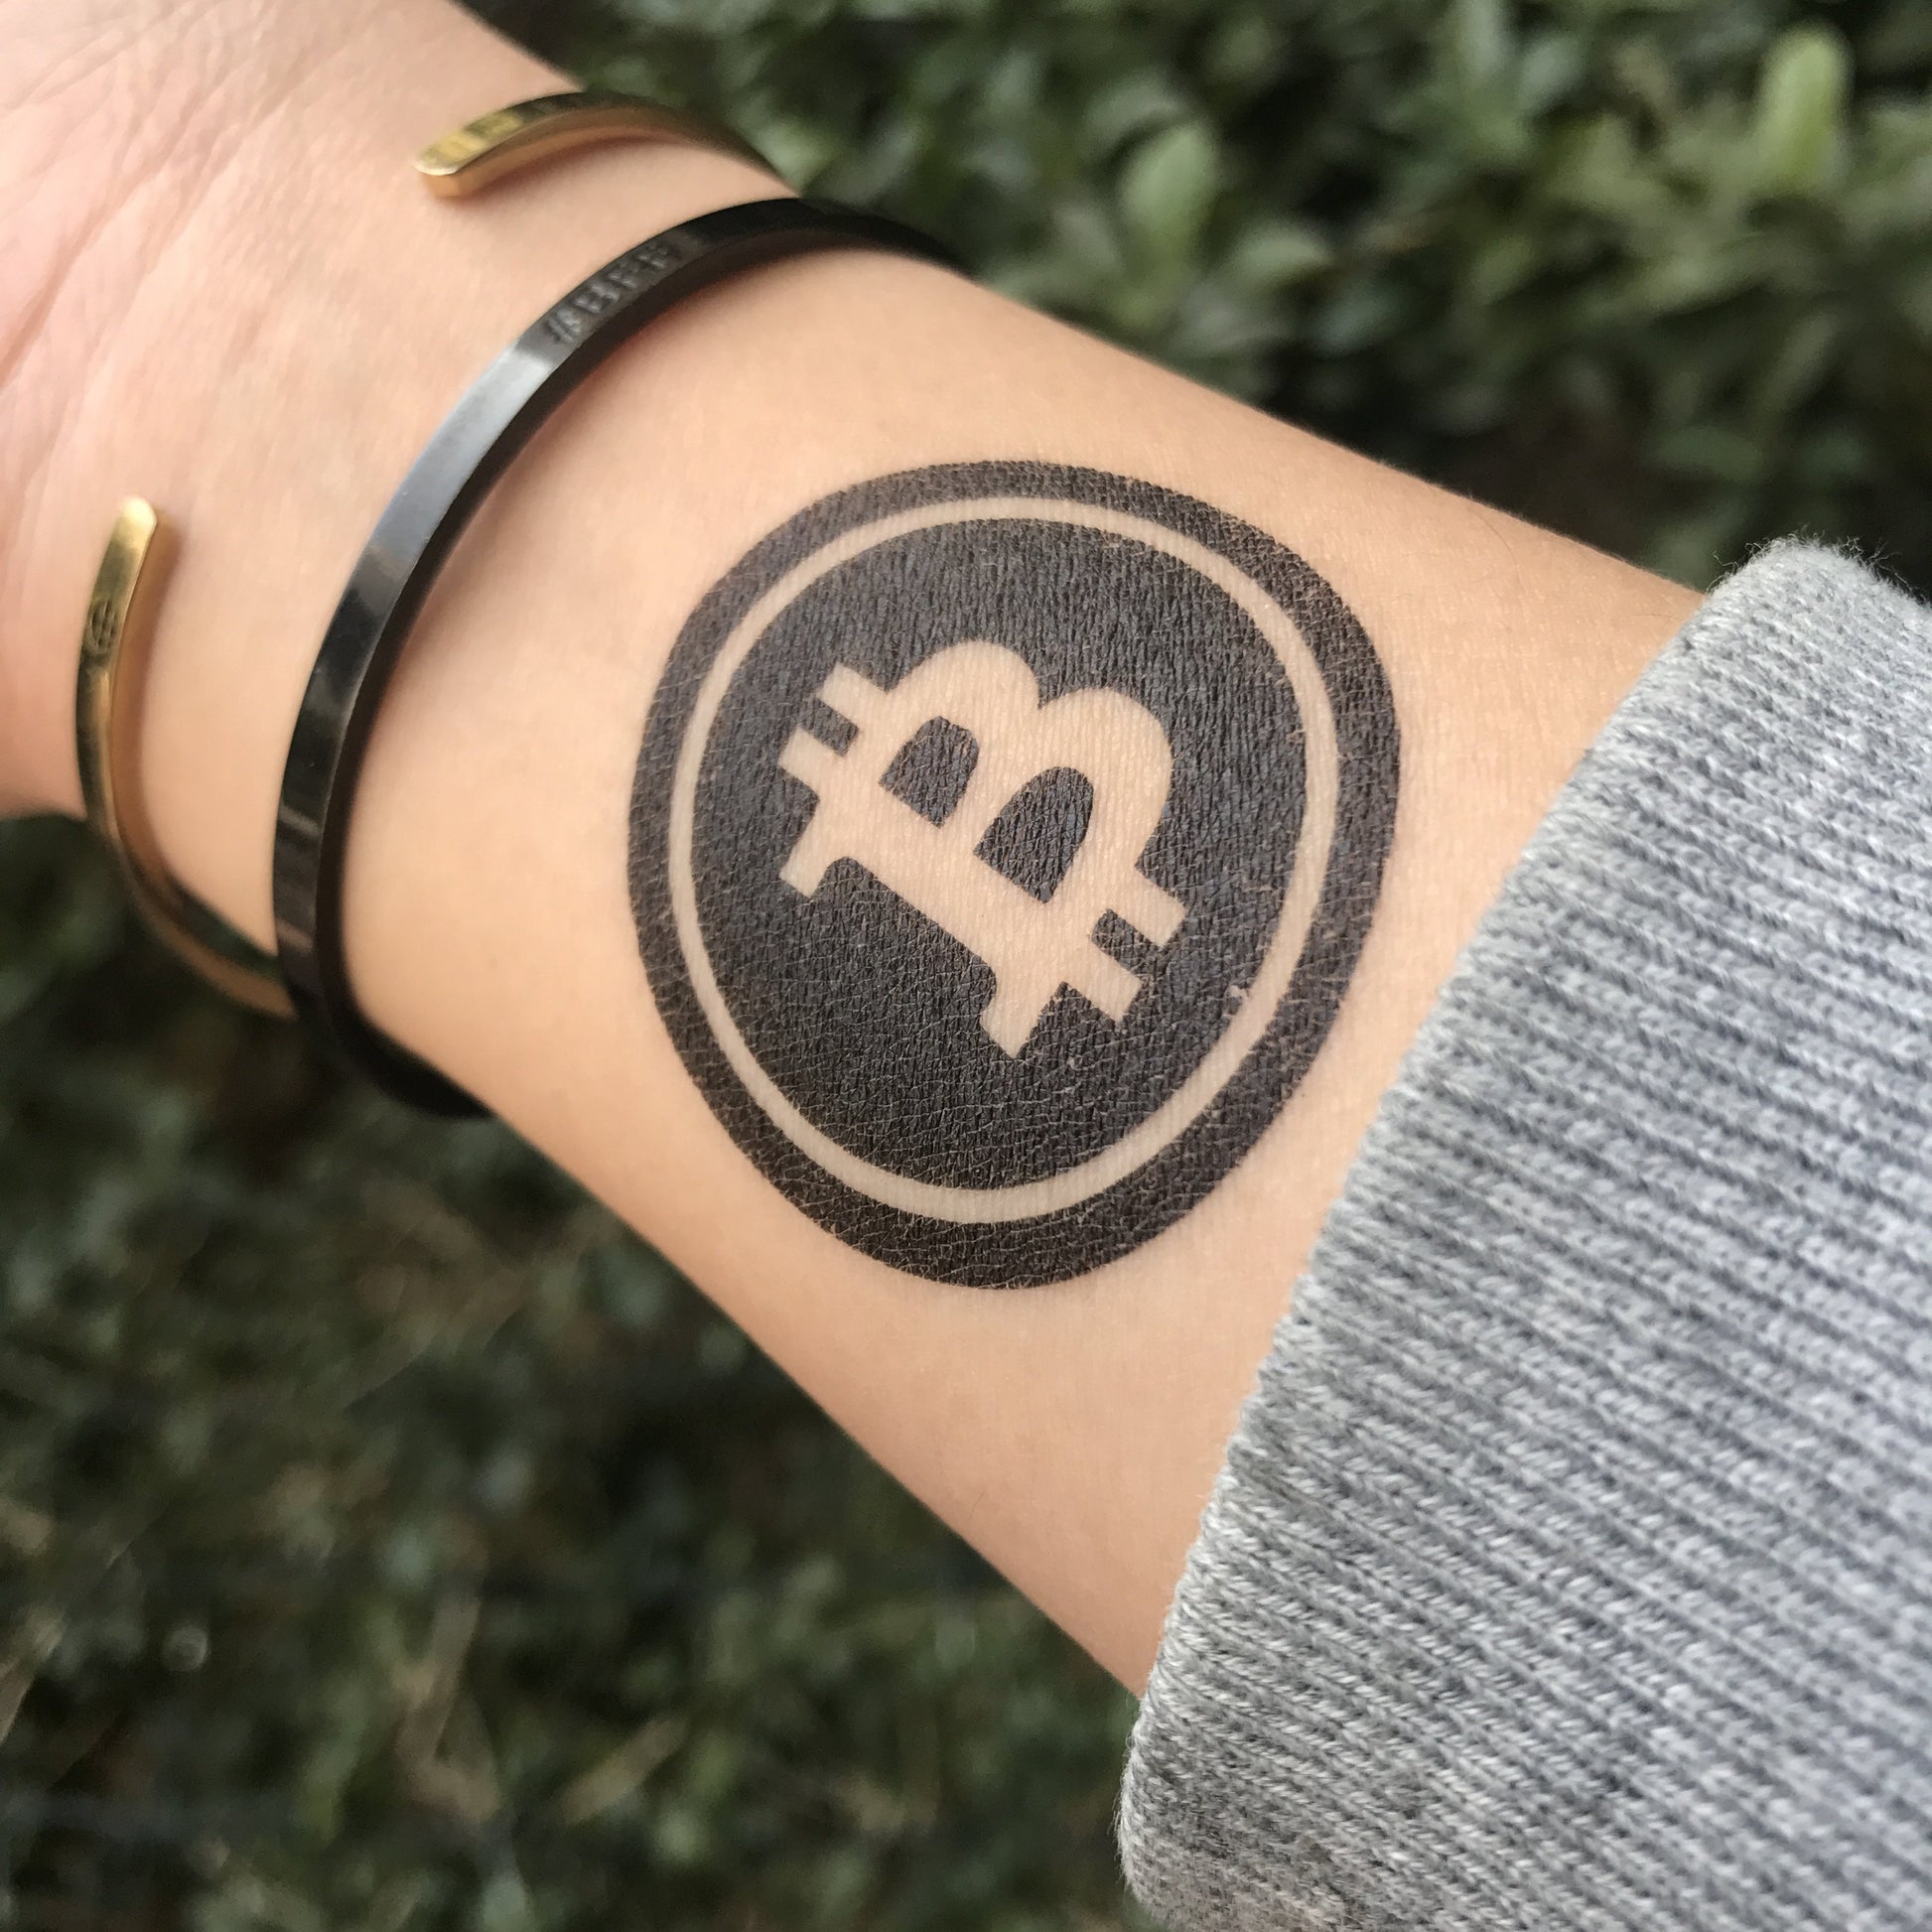 fake small bitcoin dollar sign minimalist temporary tattoo sticker design idea on wrist